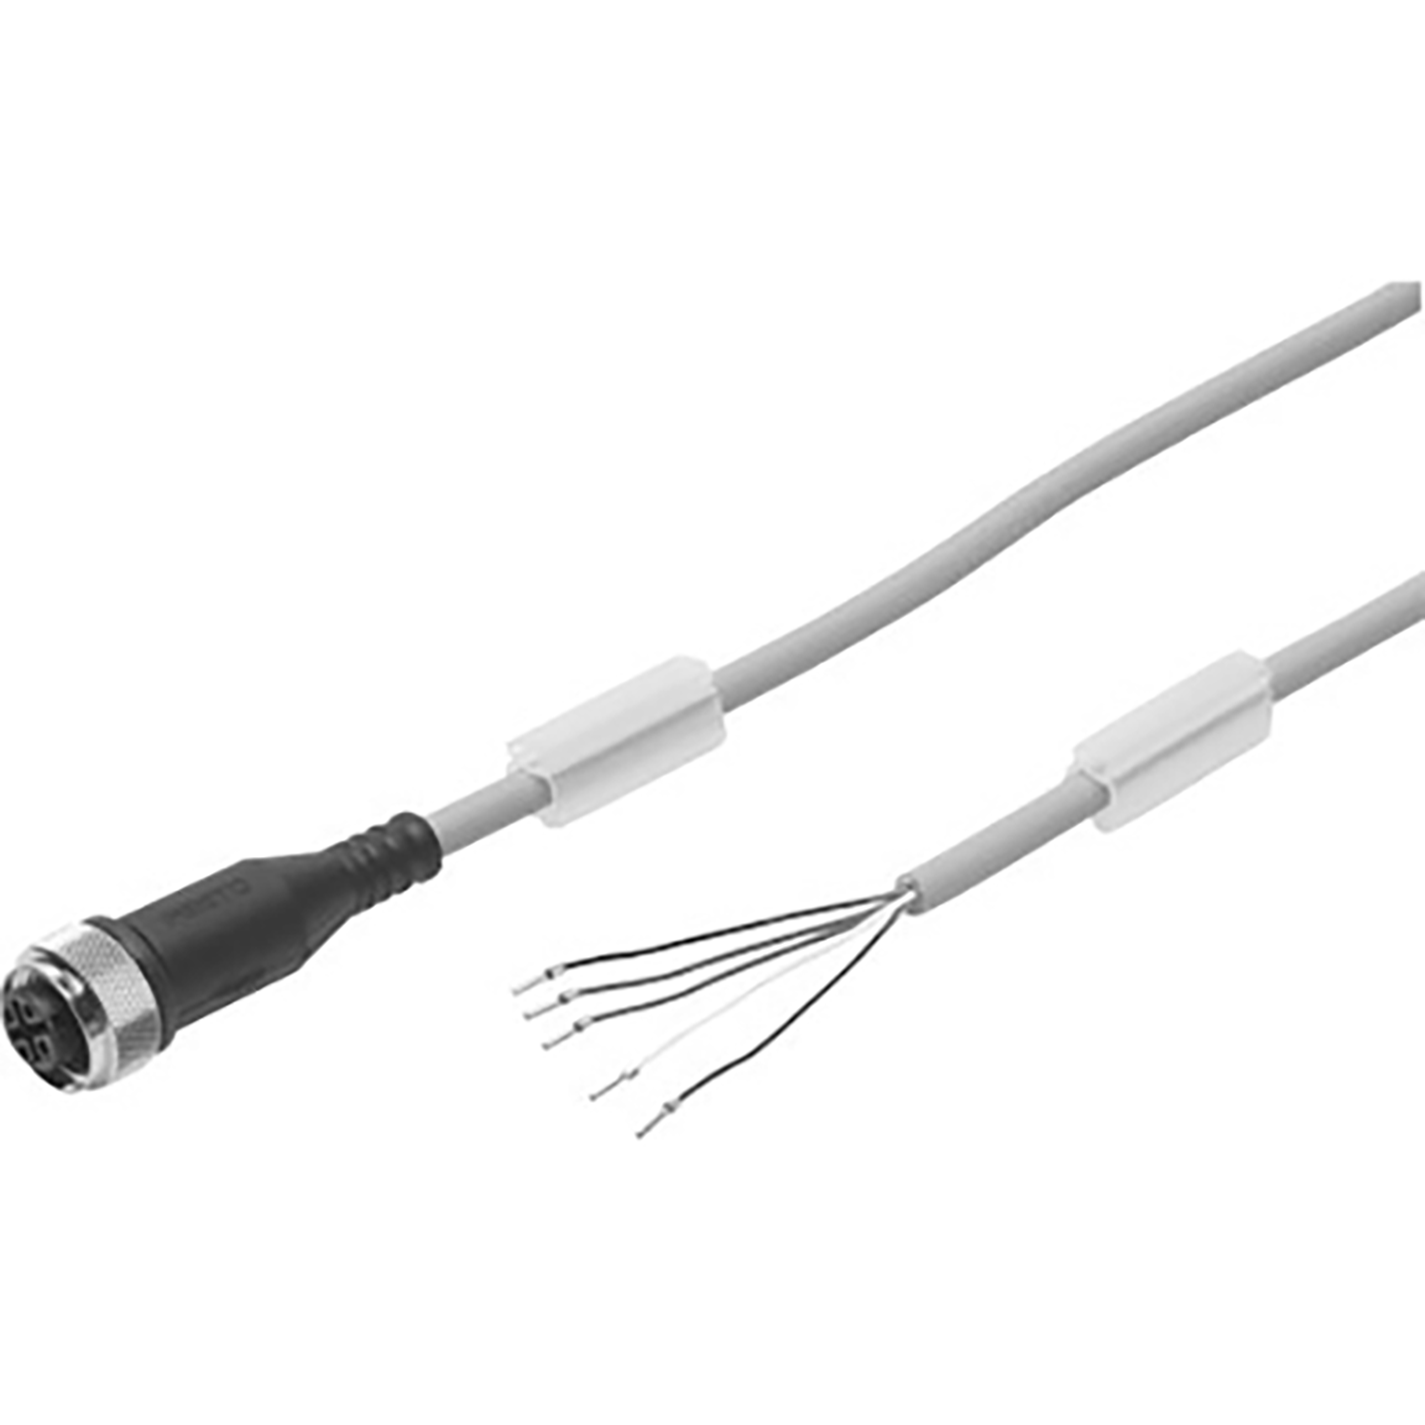 Connecting Cable NEBU-M12G5-K-2.5-LE5, Festo